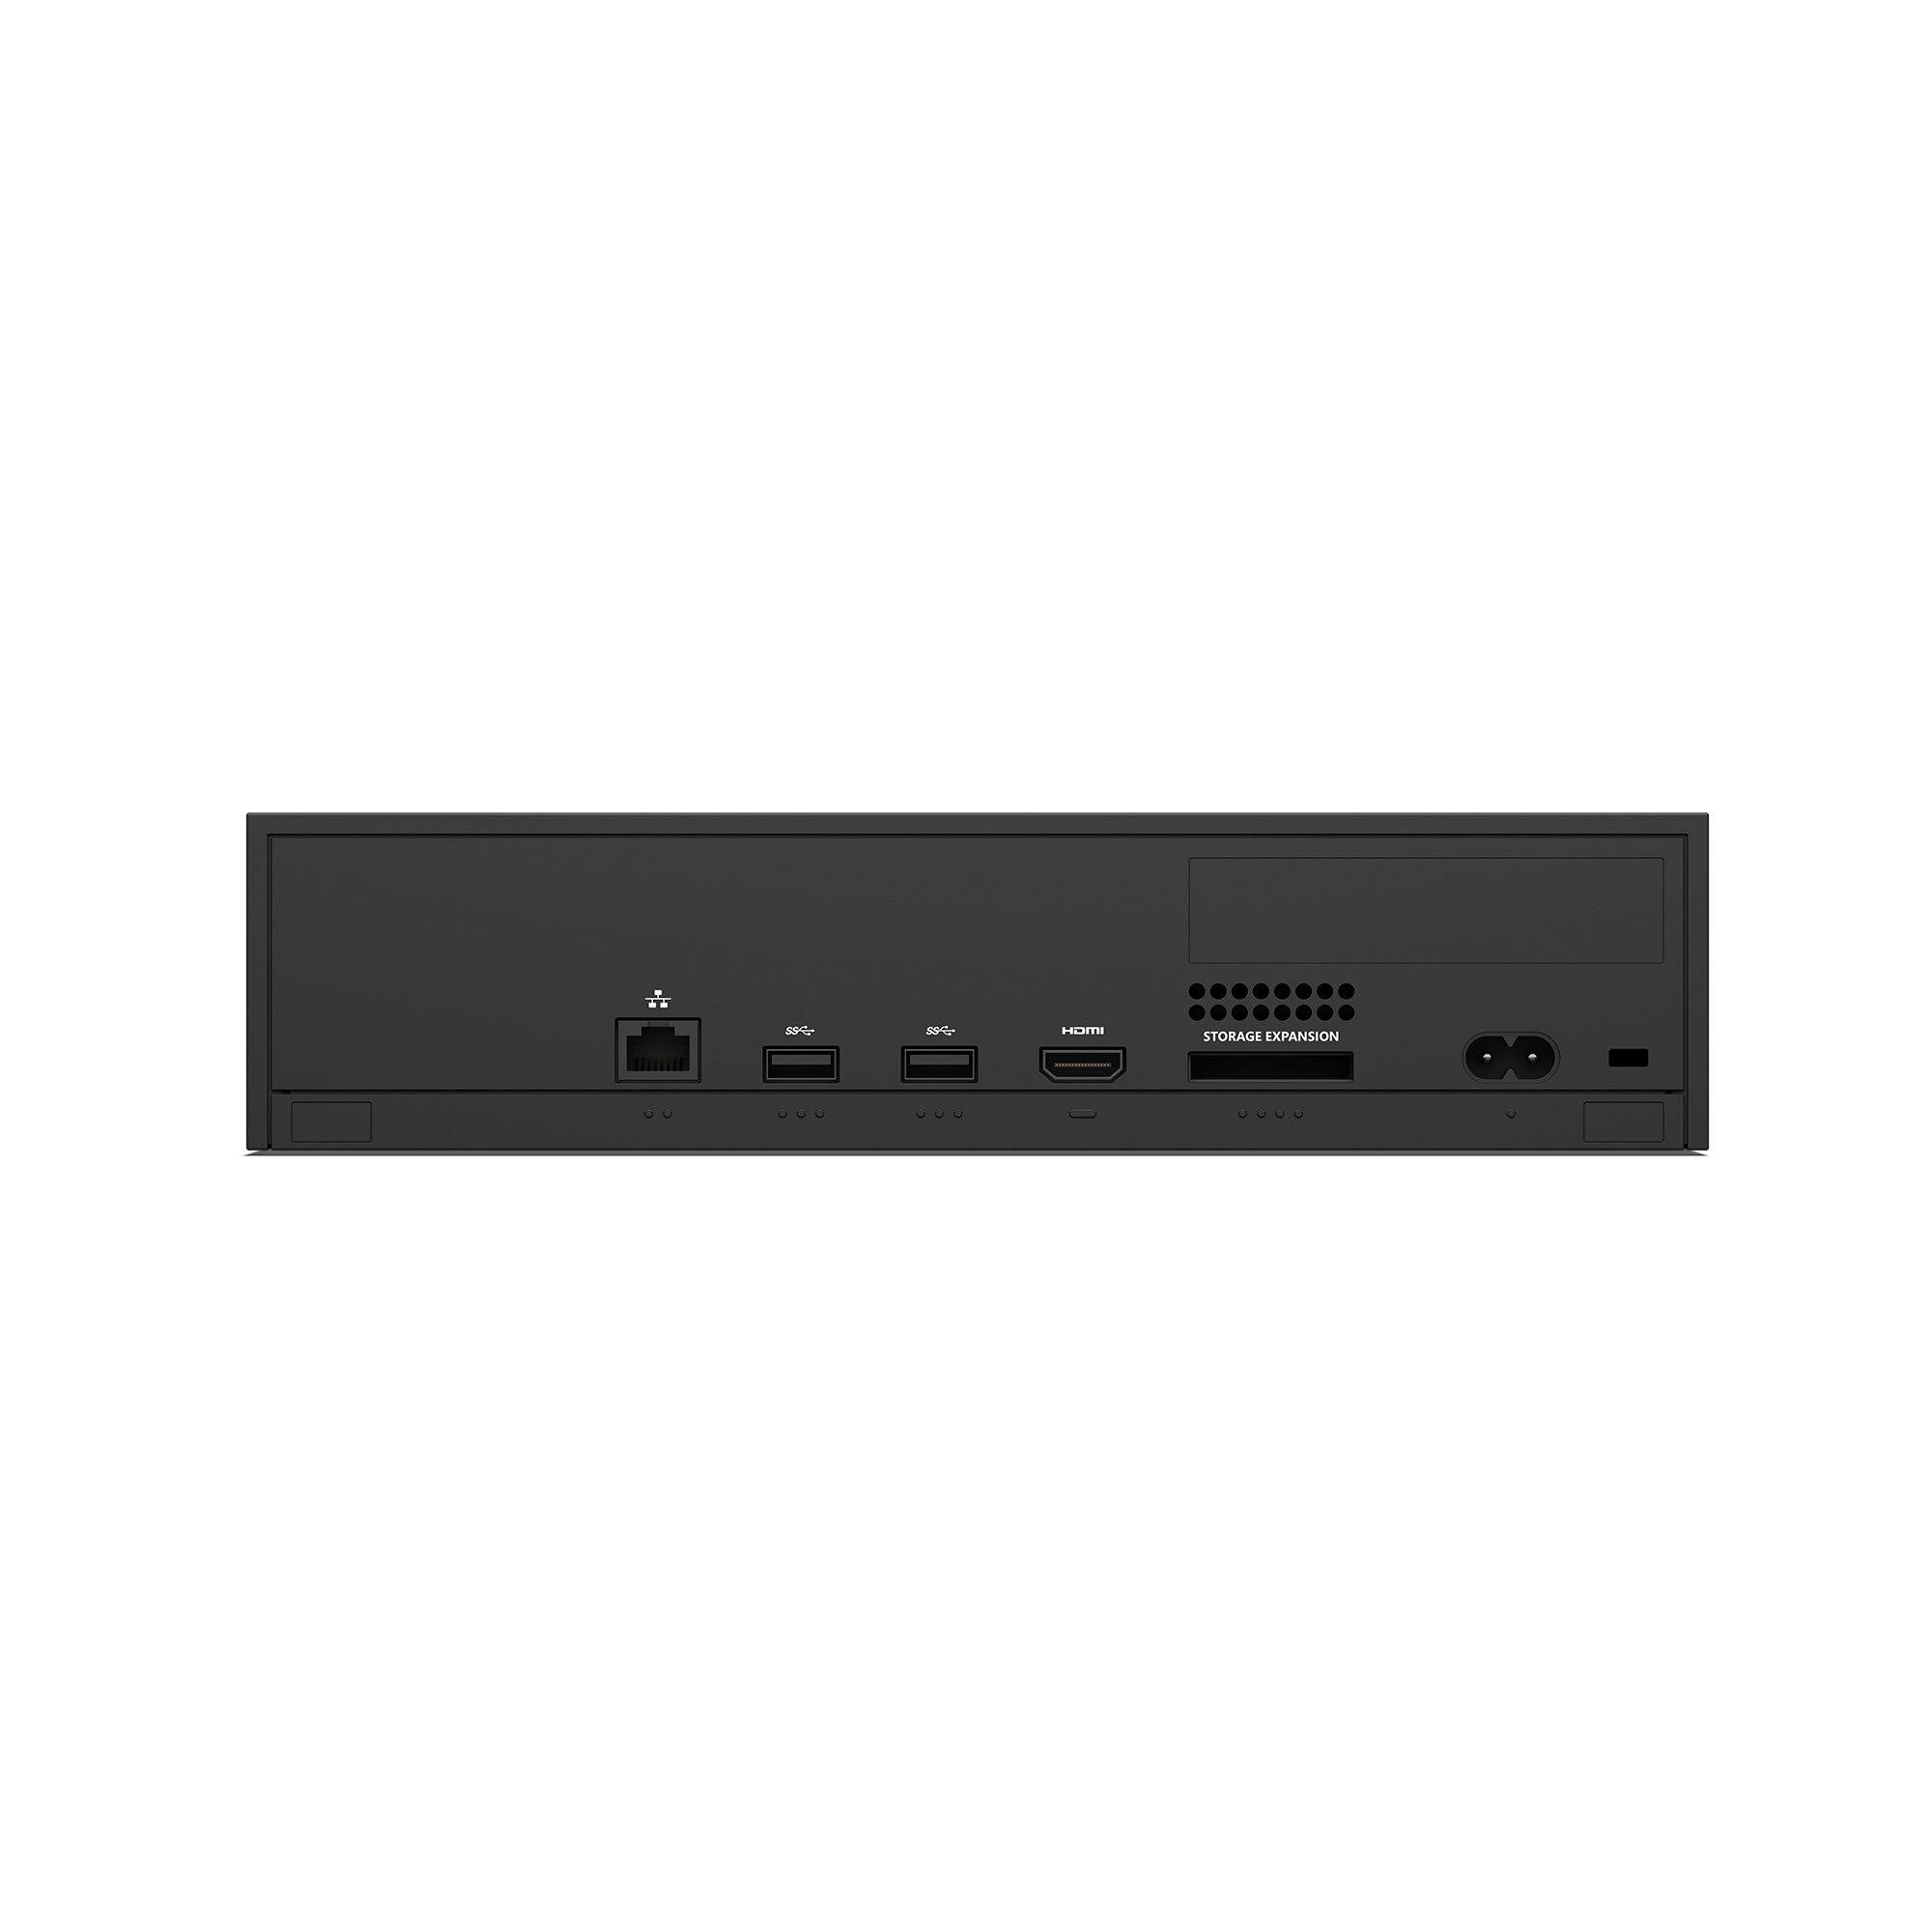 1TB Console Series Black Xbox - Digital S Microsoft | GameStop